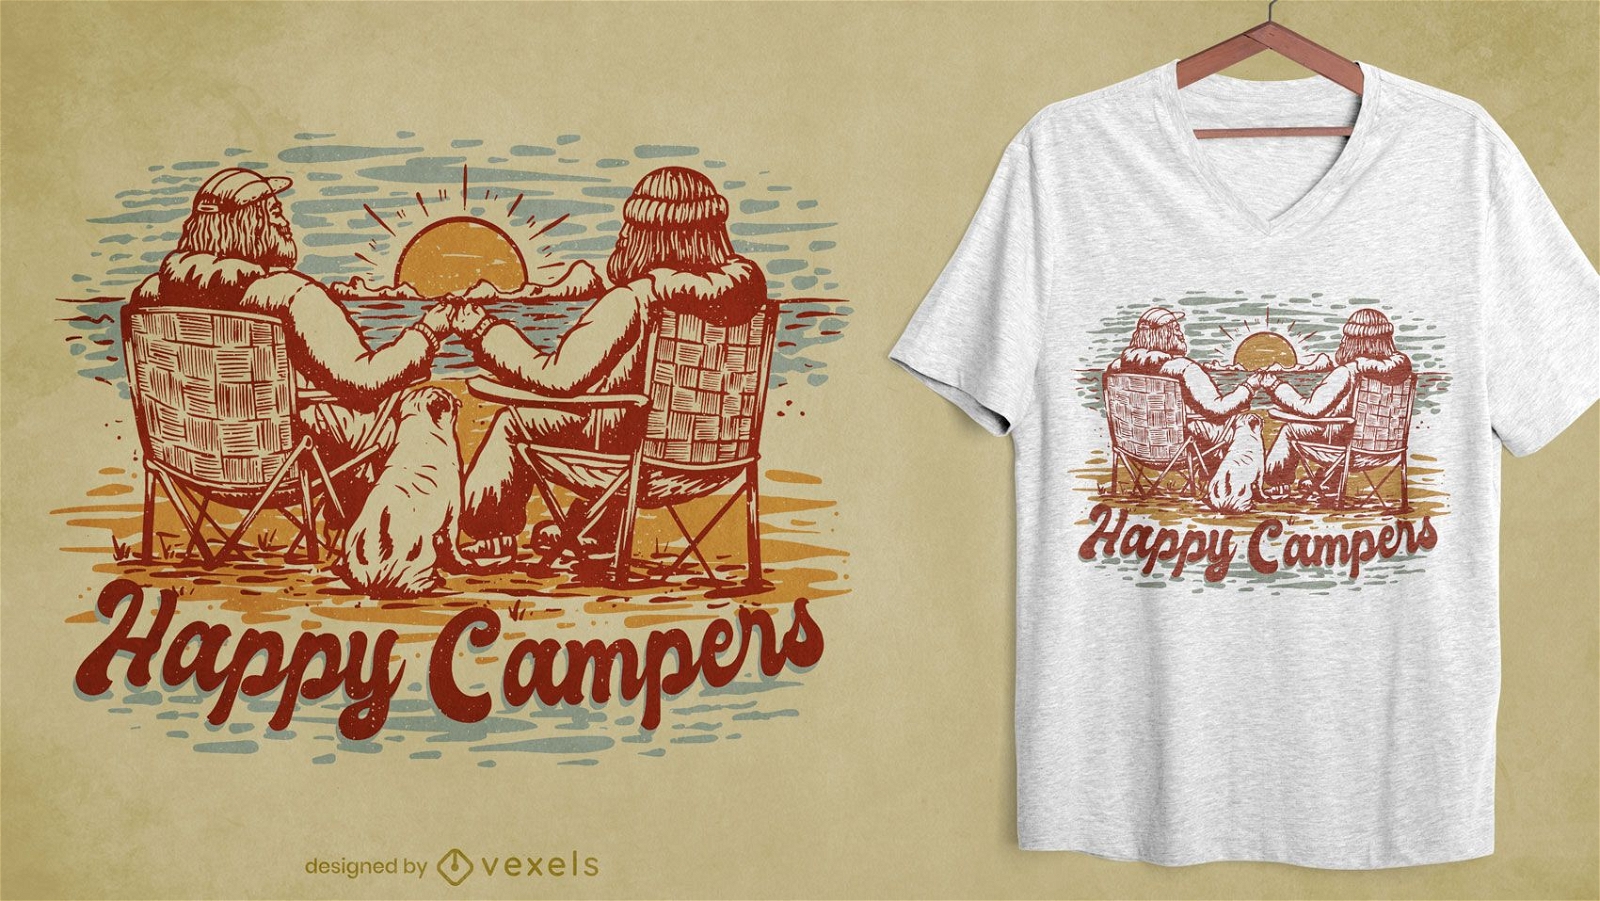 Camping hand-drawn t-shirt design